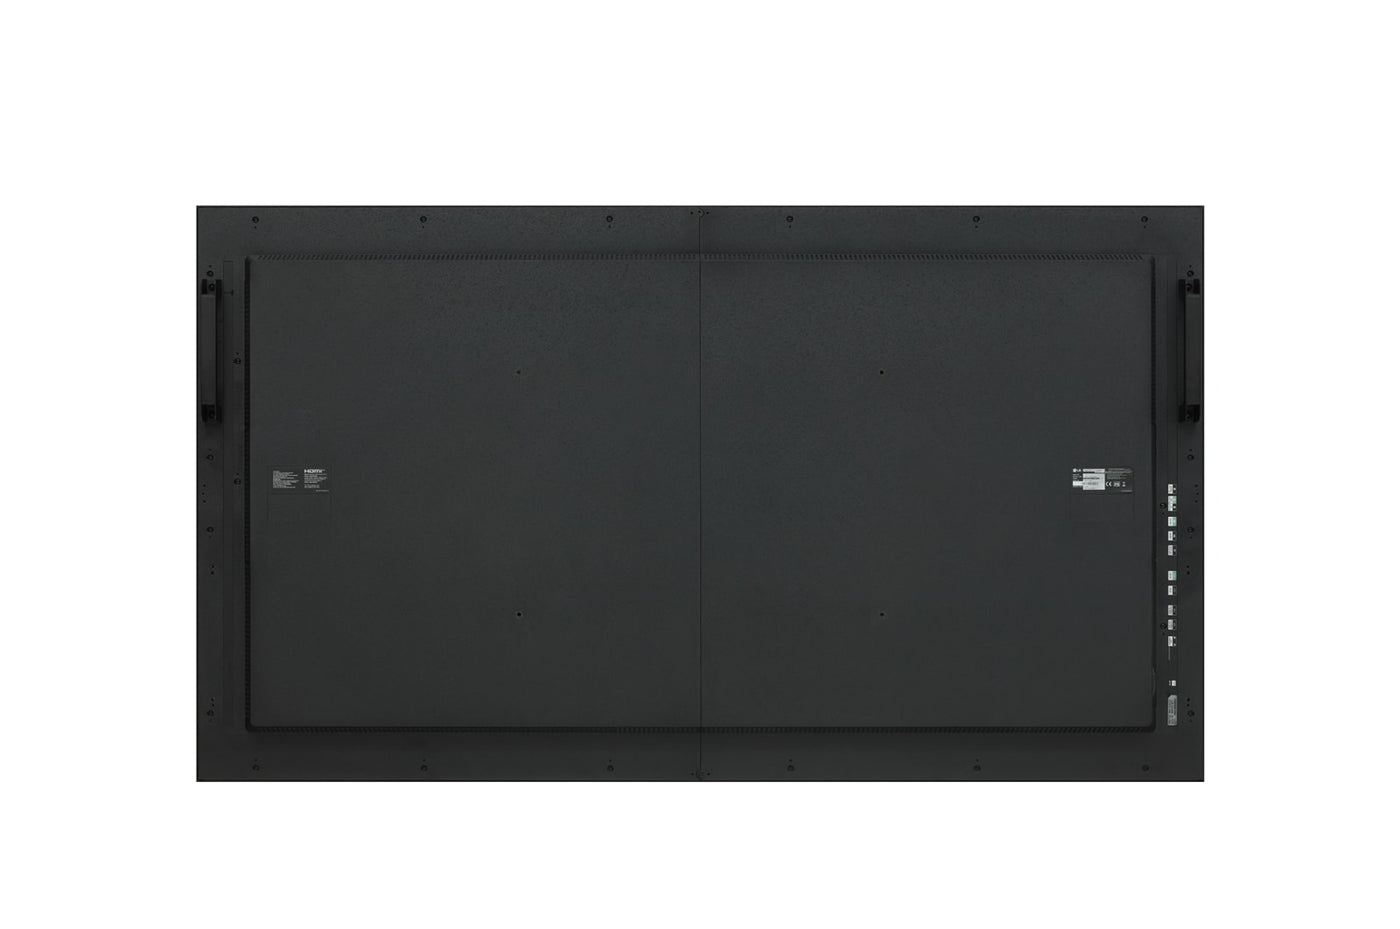 LG 75XS4G-B 75" UHD Window Facing High Brightness Display Rear View Back of Display